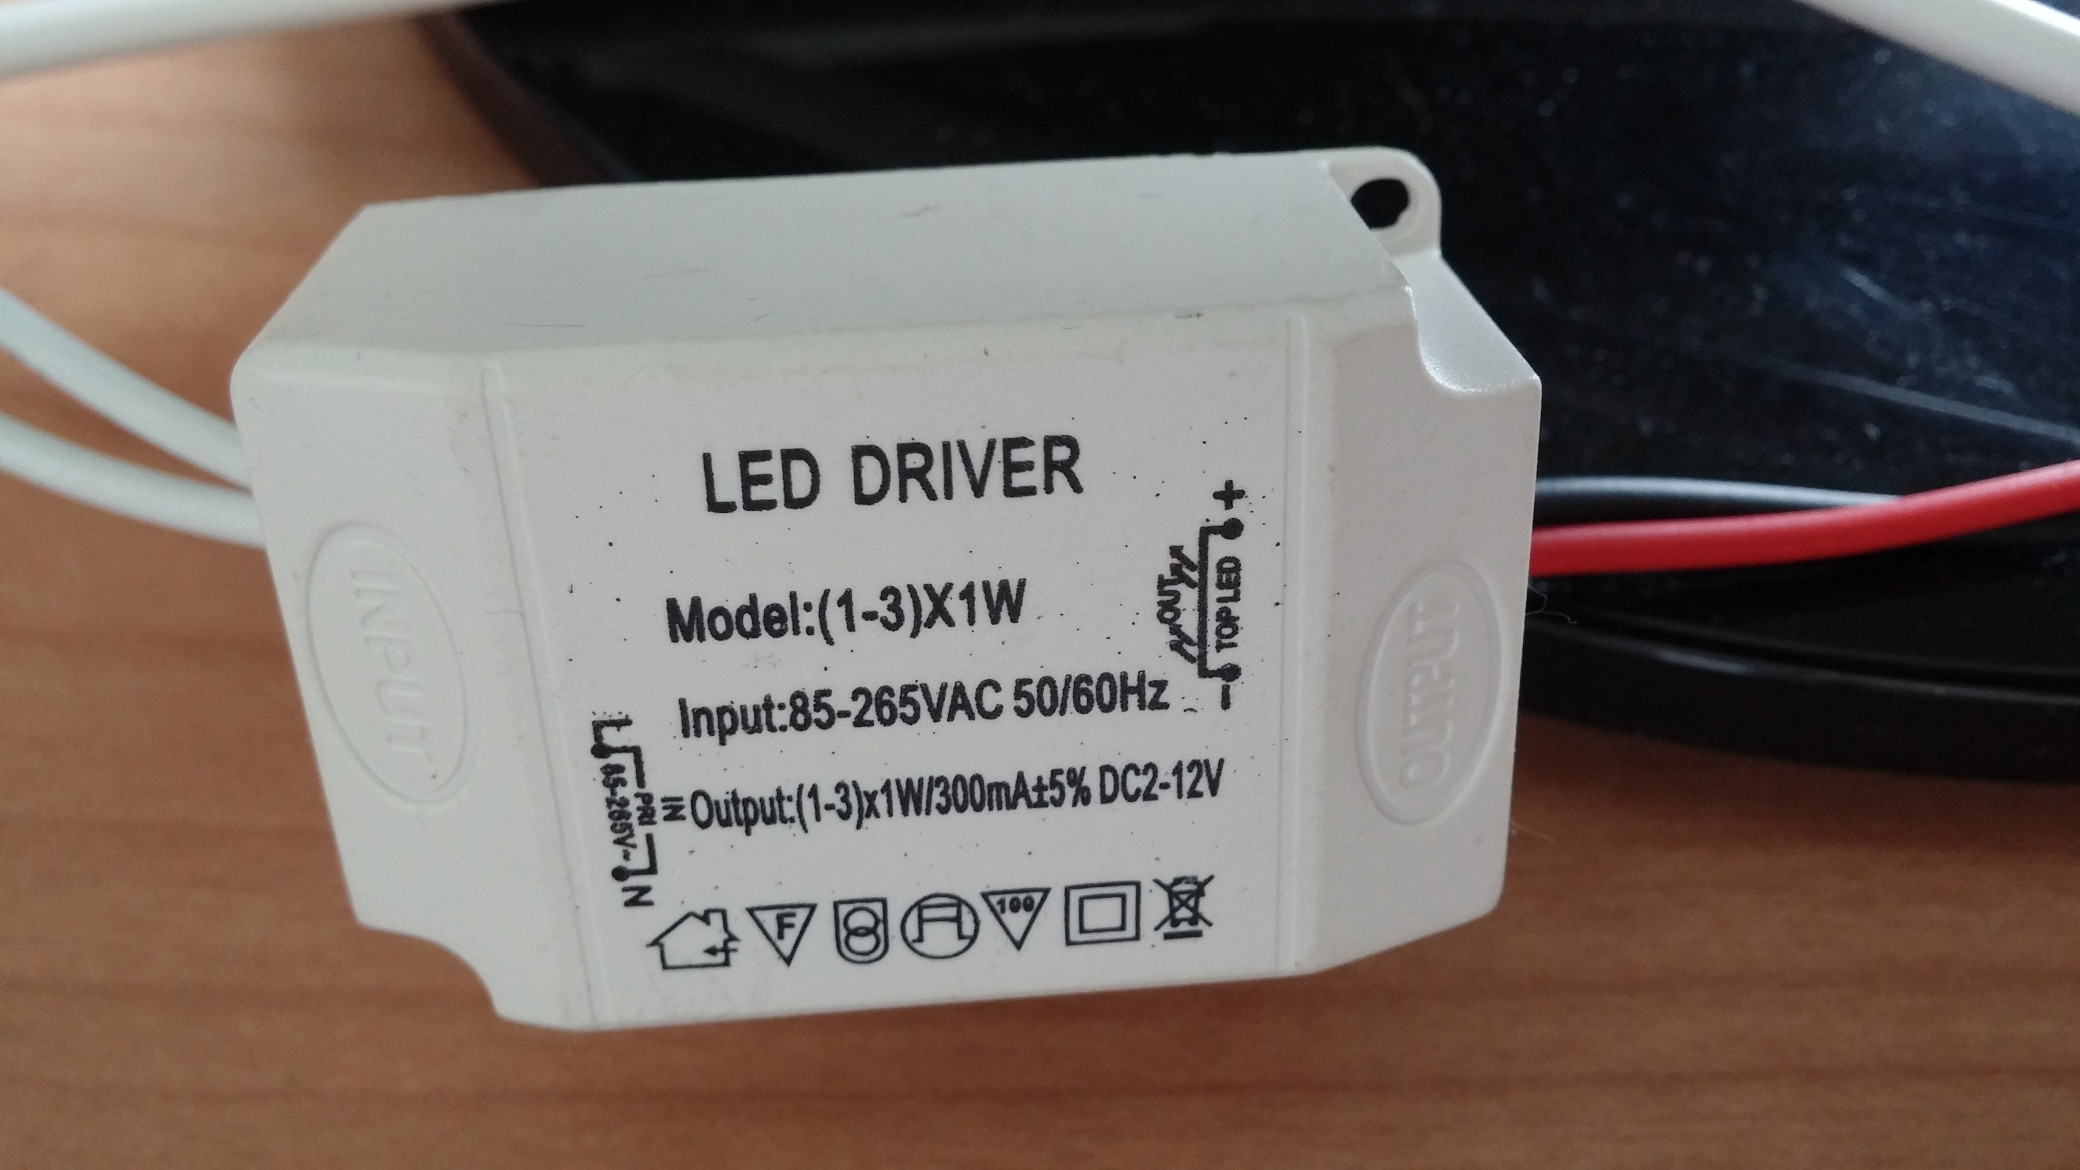 LED Driver vs DC Power Supply vs Transformer